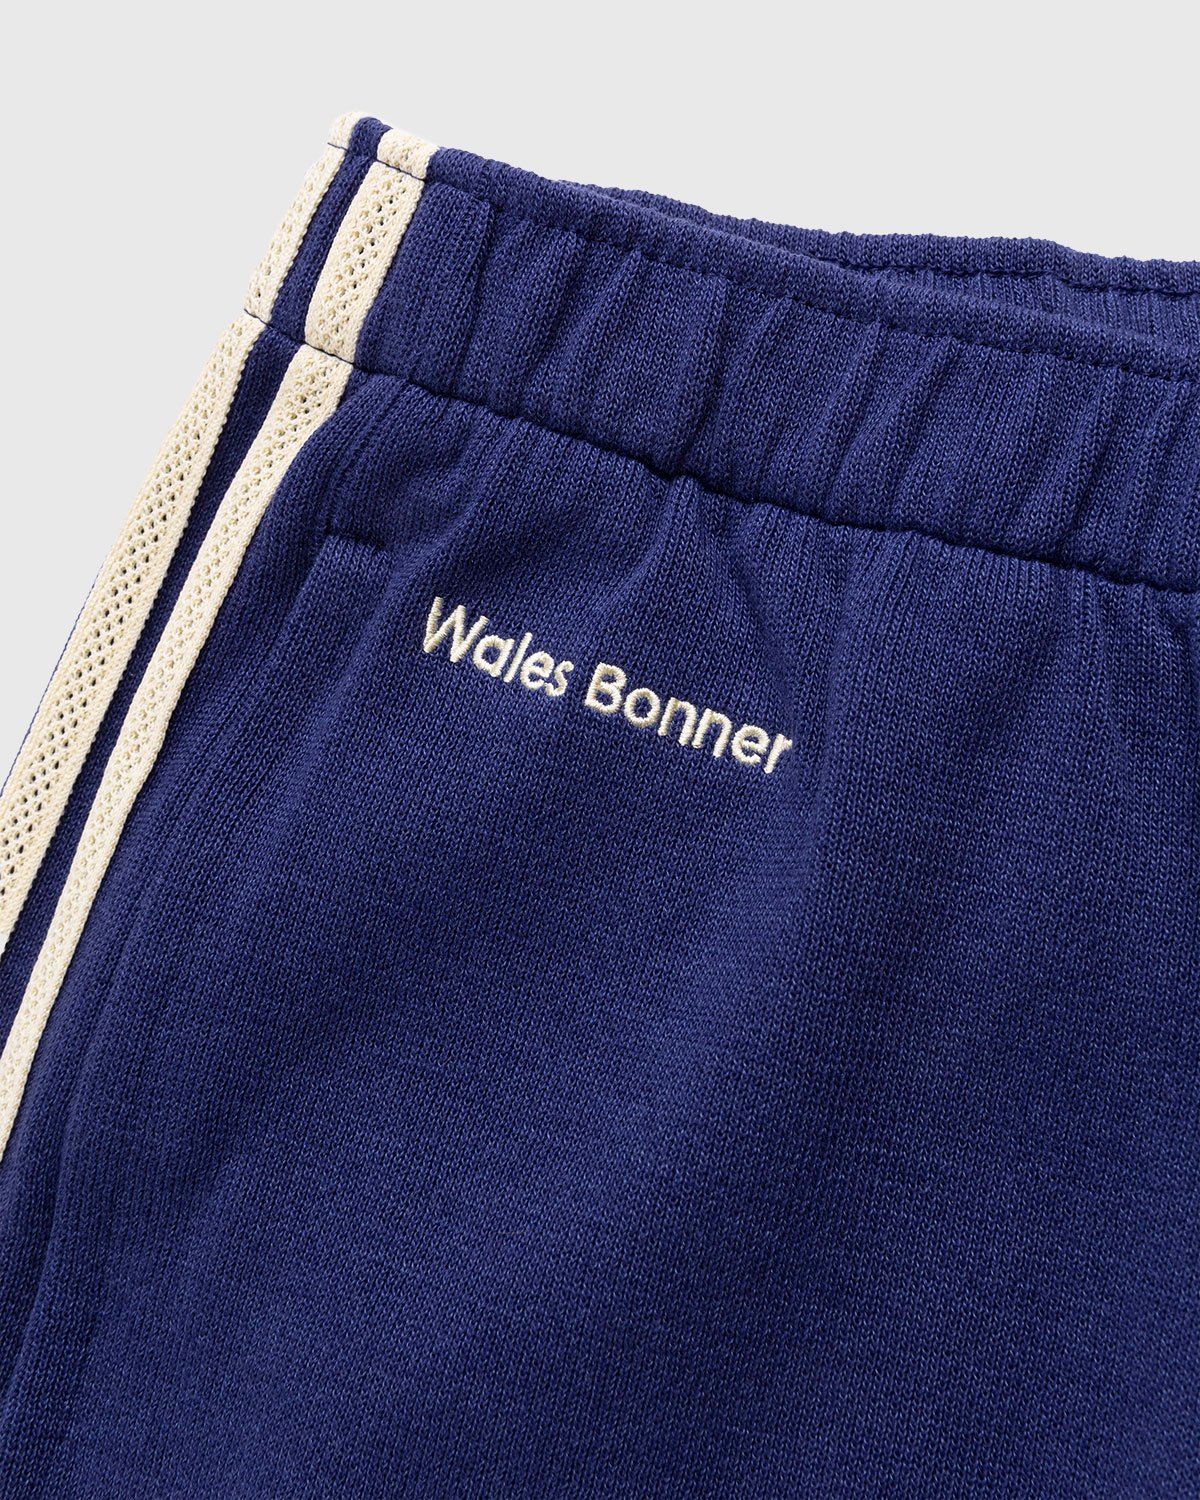 Adidas x Wales Bonner - 80s Track Pants Night Sky - Clothing - Blue - Image 7